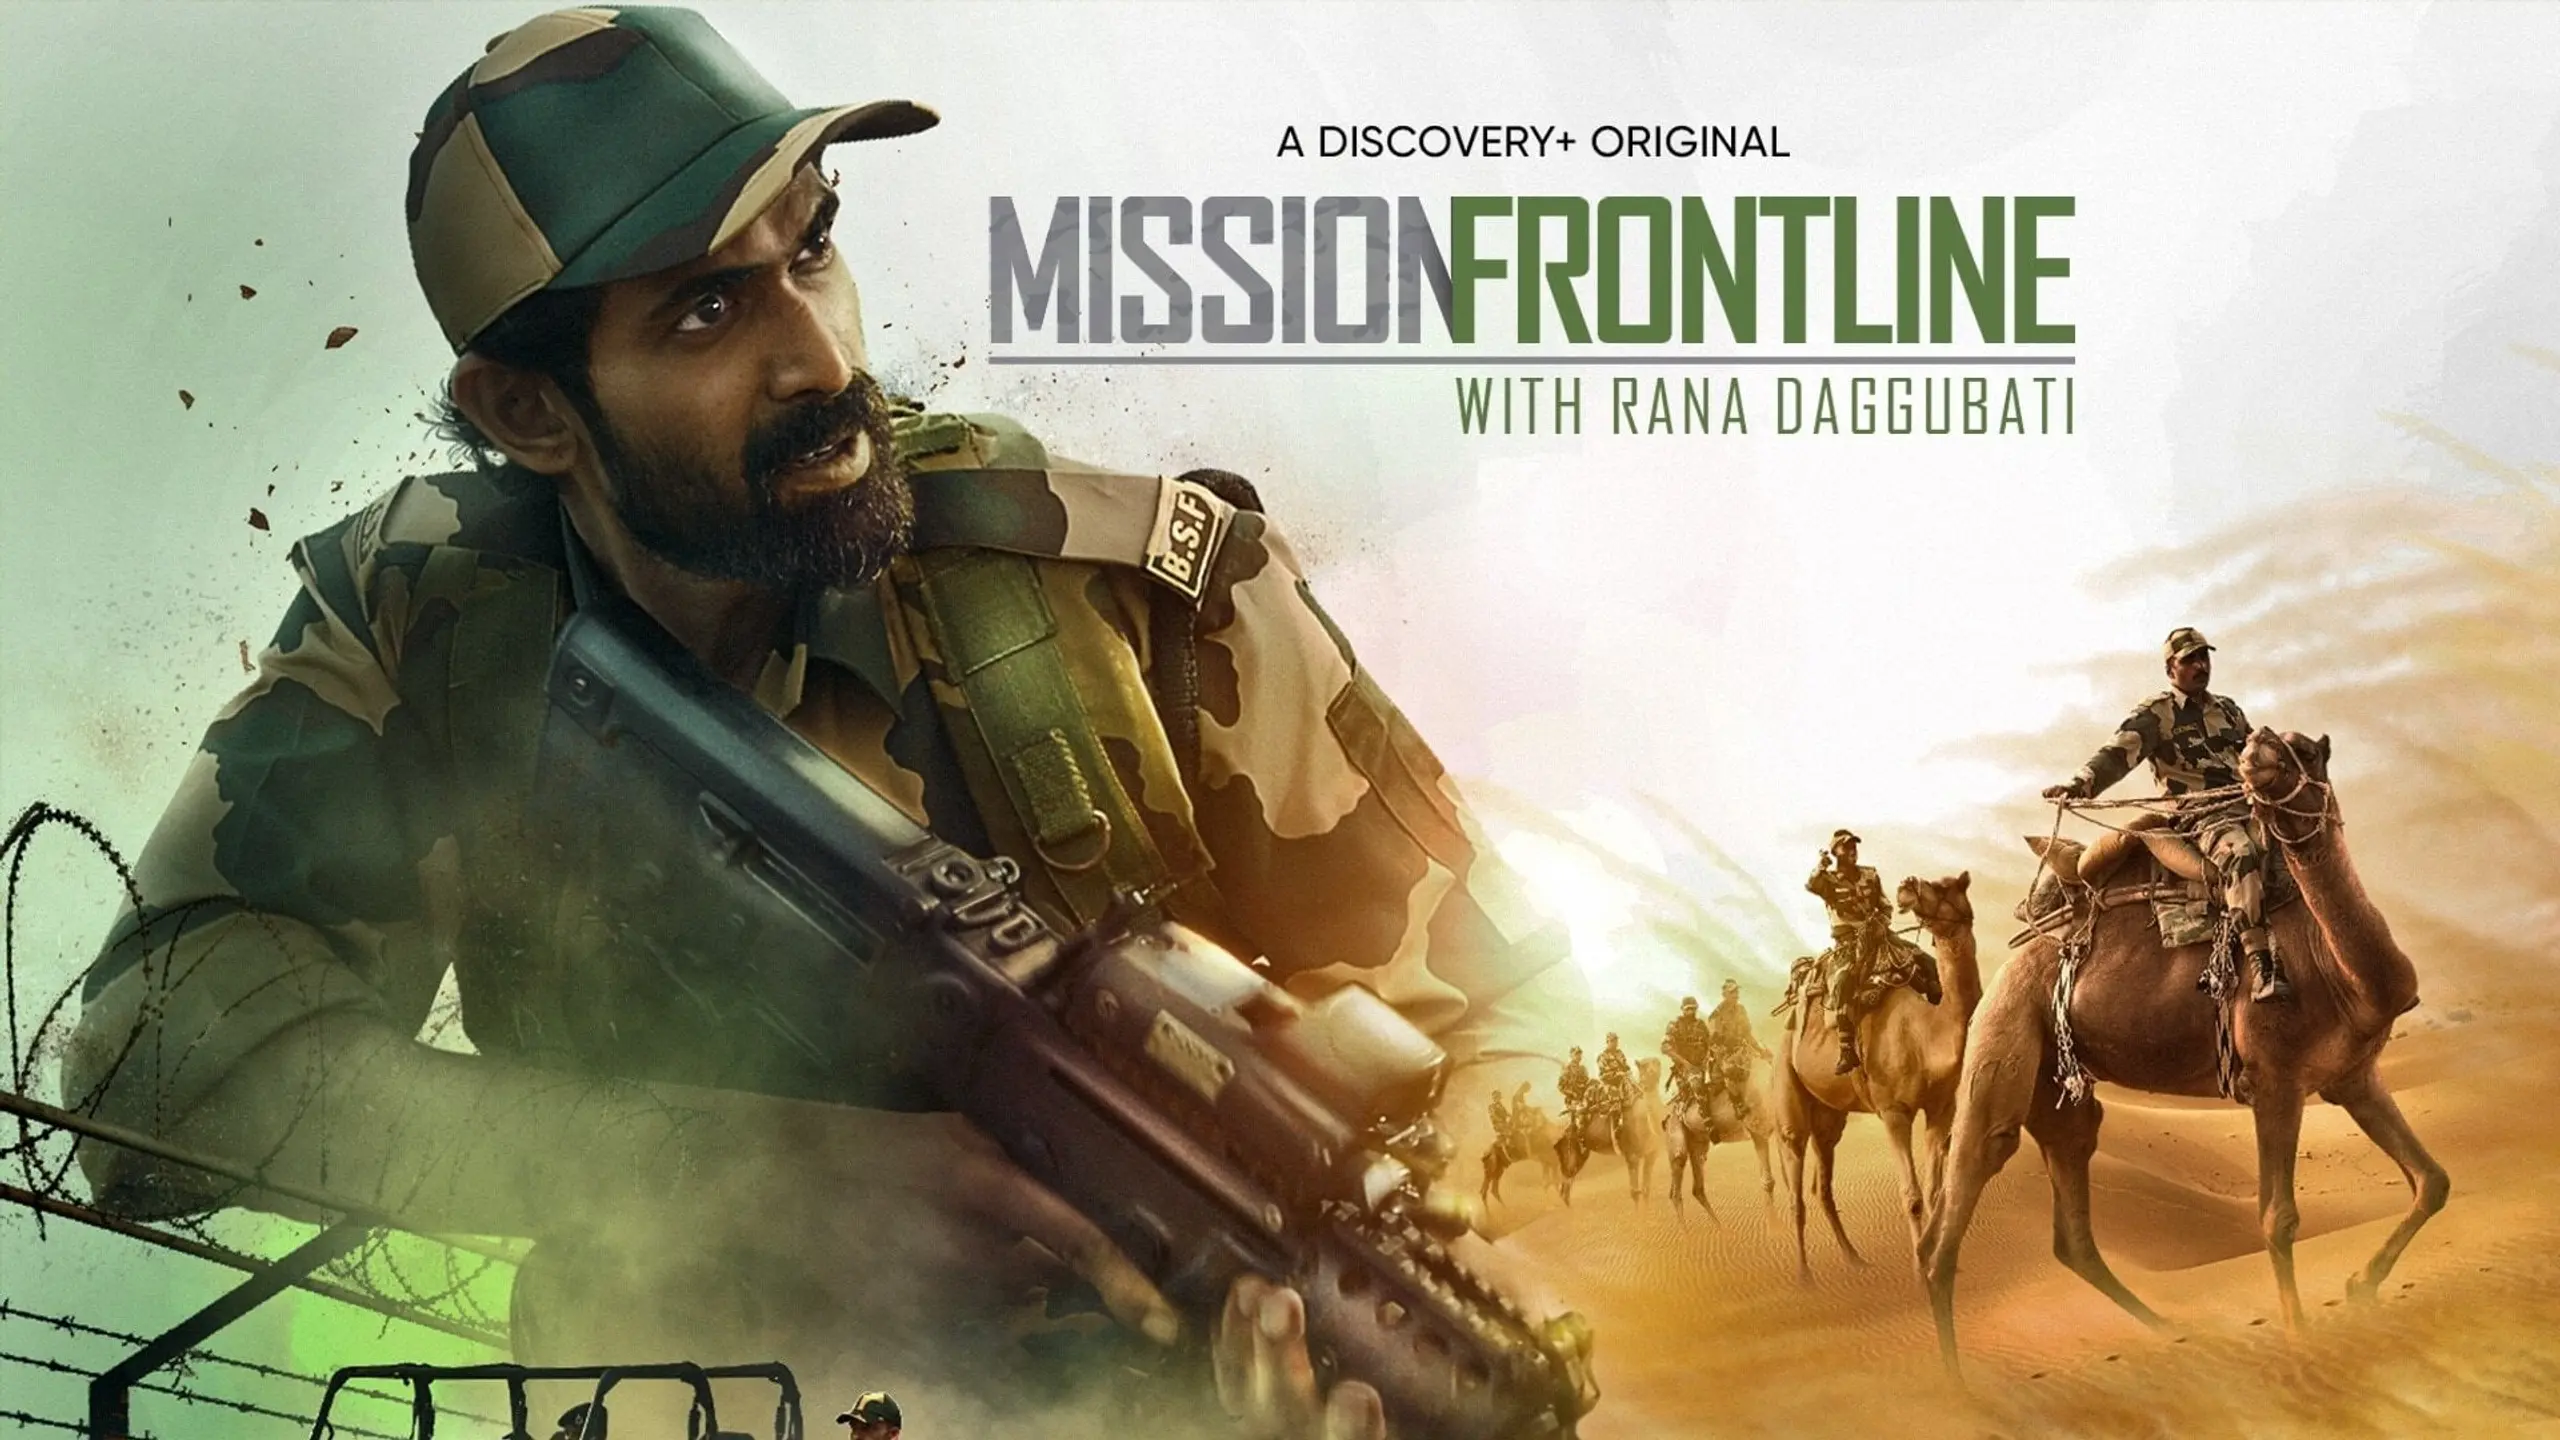 Mission Frontline with Rana Daggubati